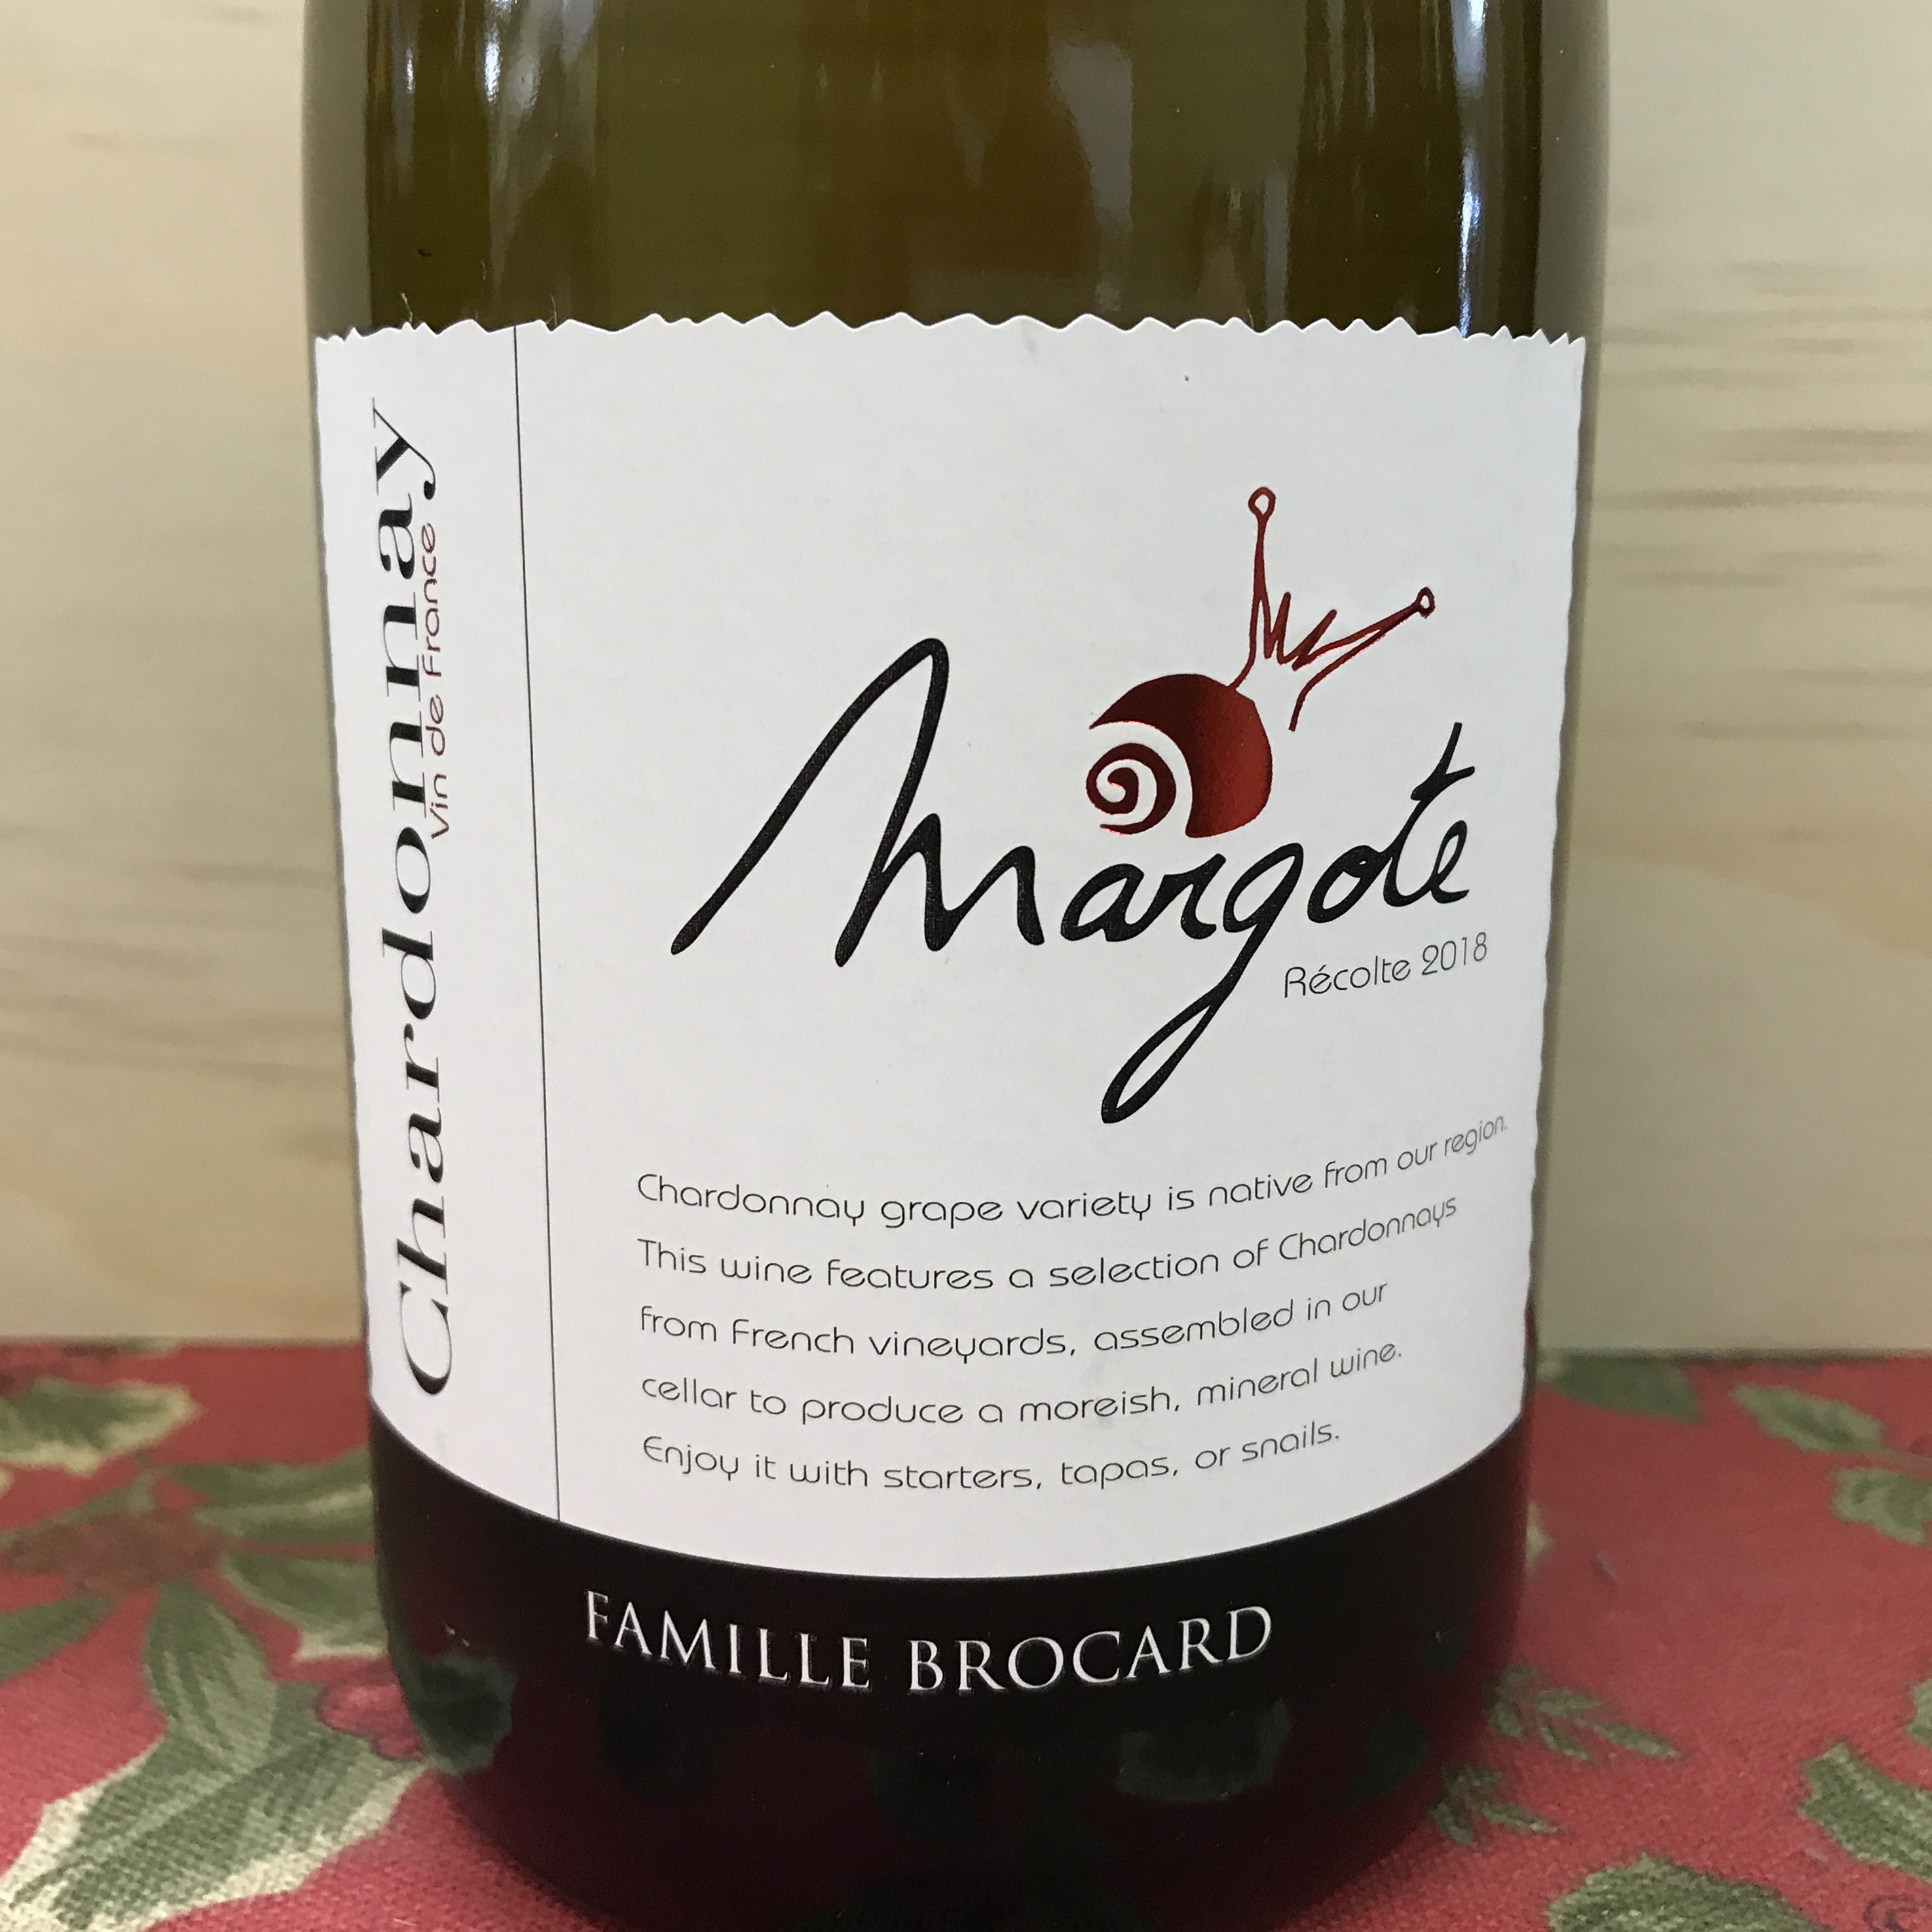 Famille Brocard Margote Chardonnay 2018